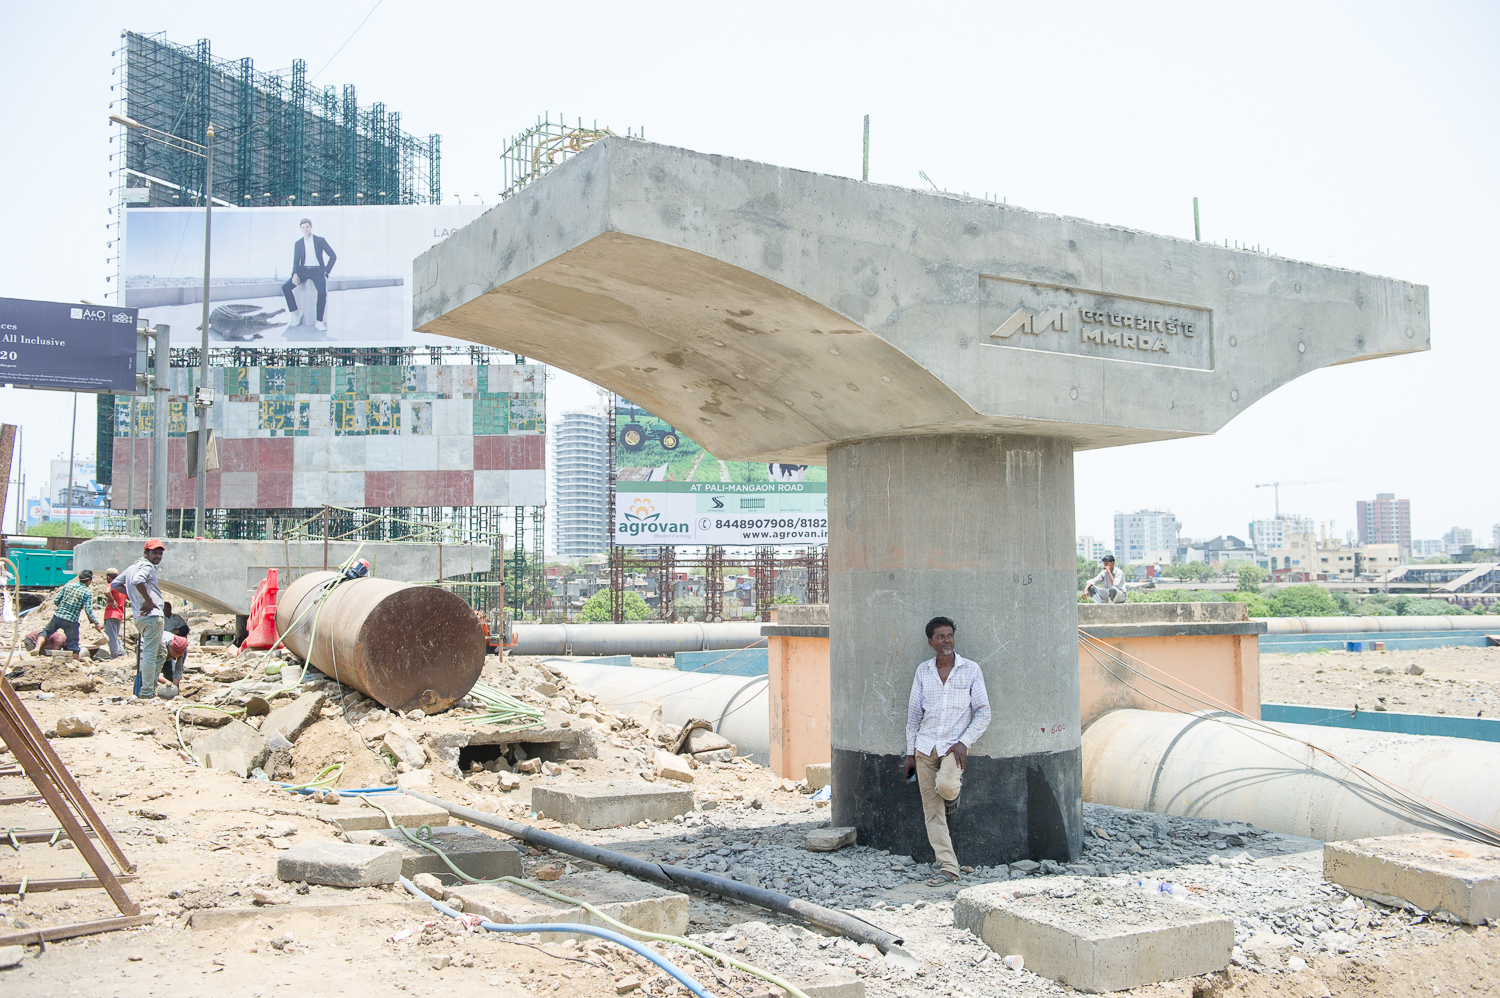  Construction worker on a break, Bandra, Mumbai 